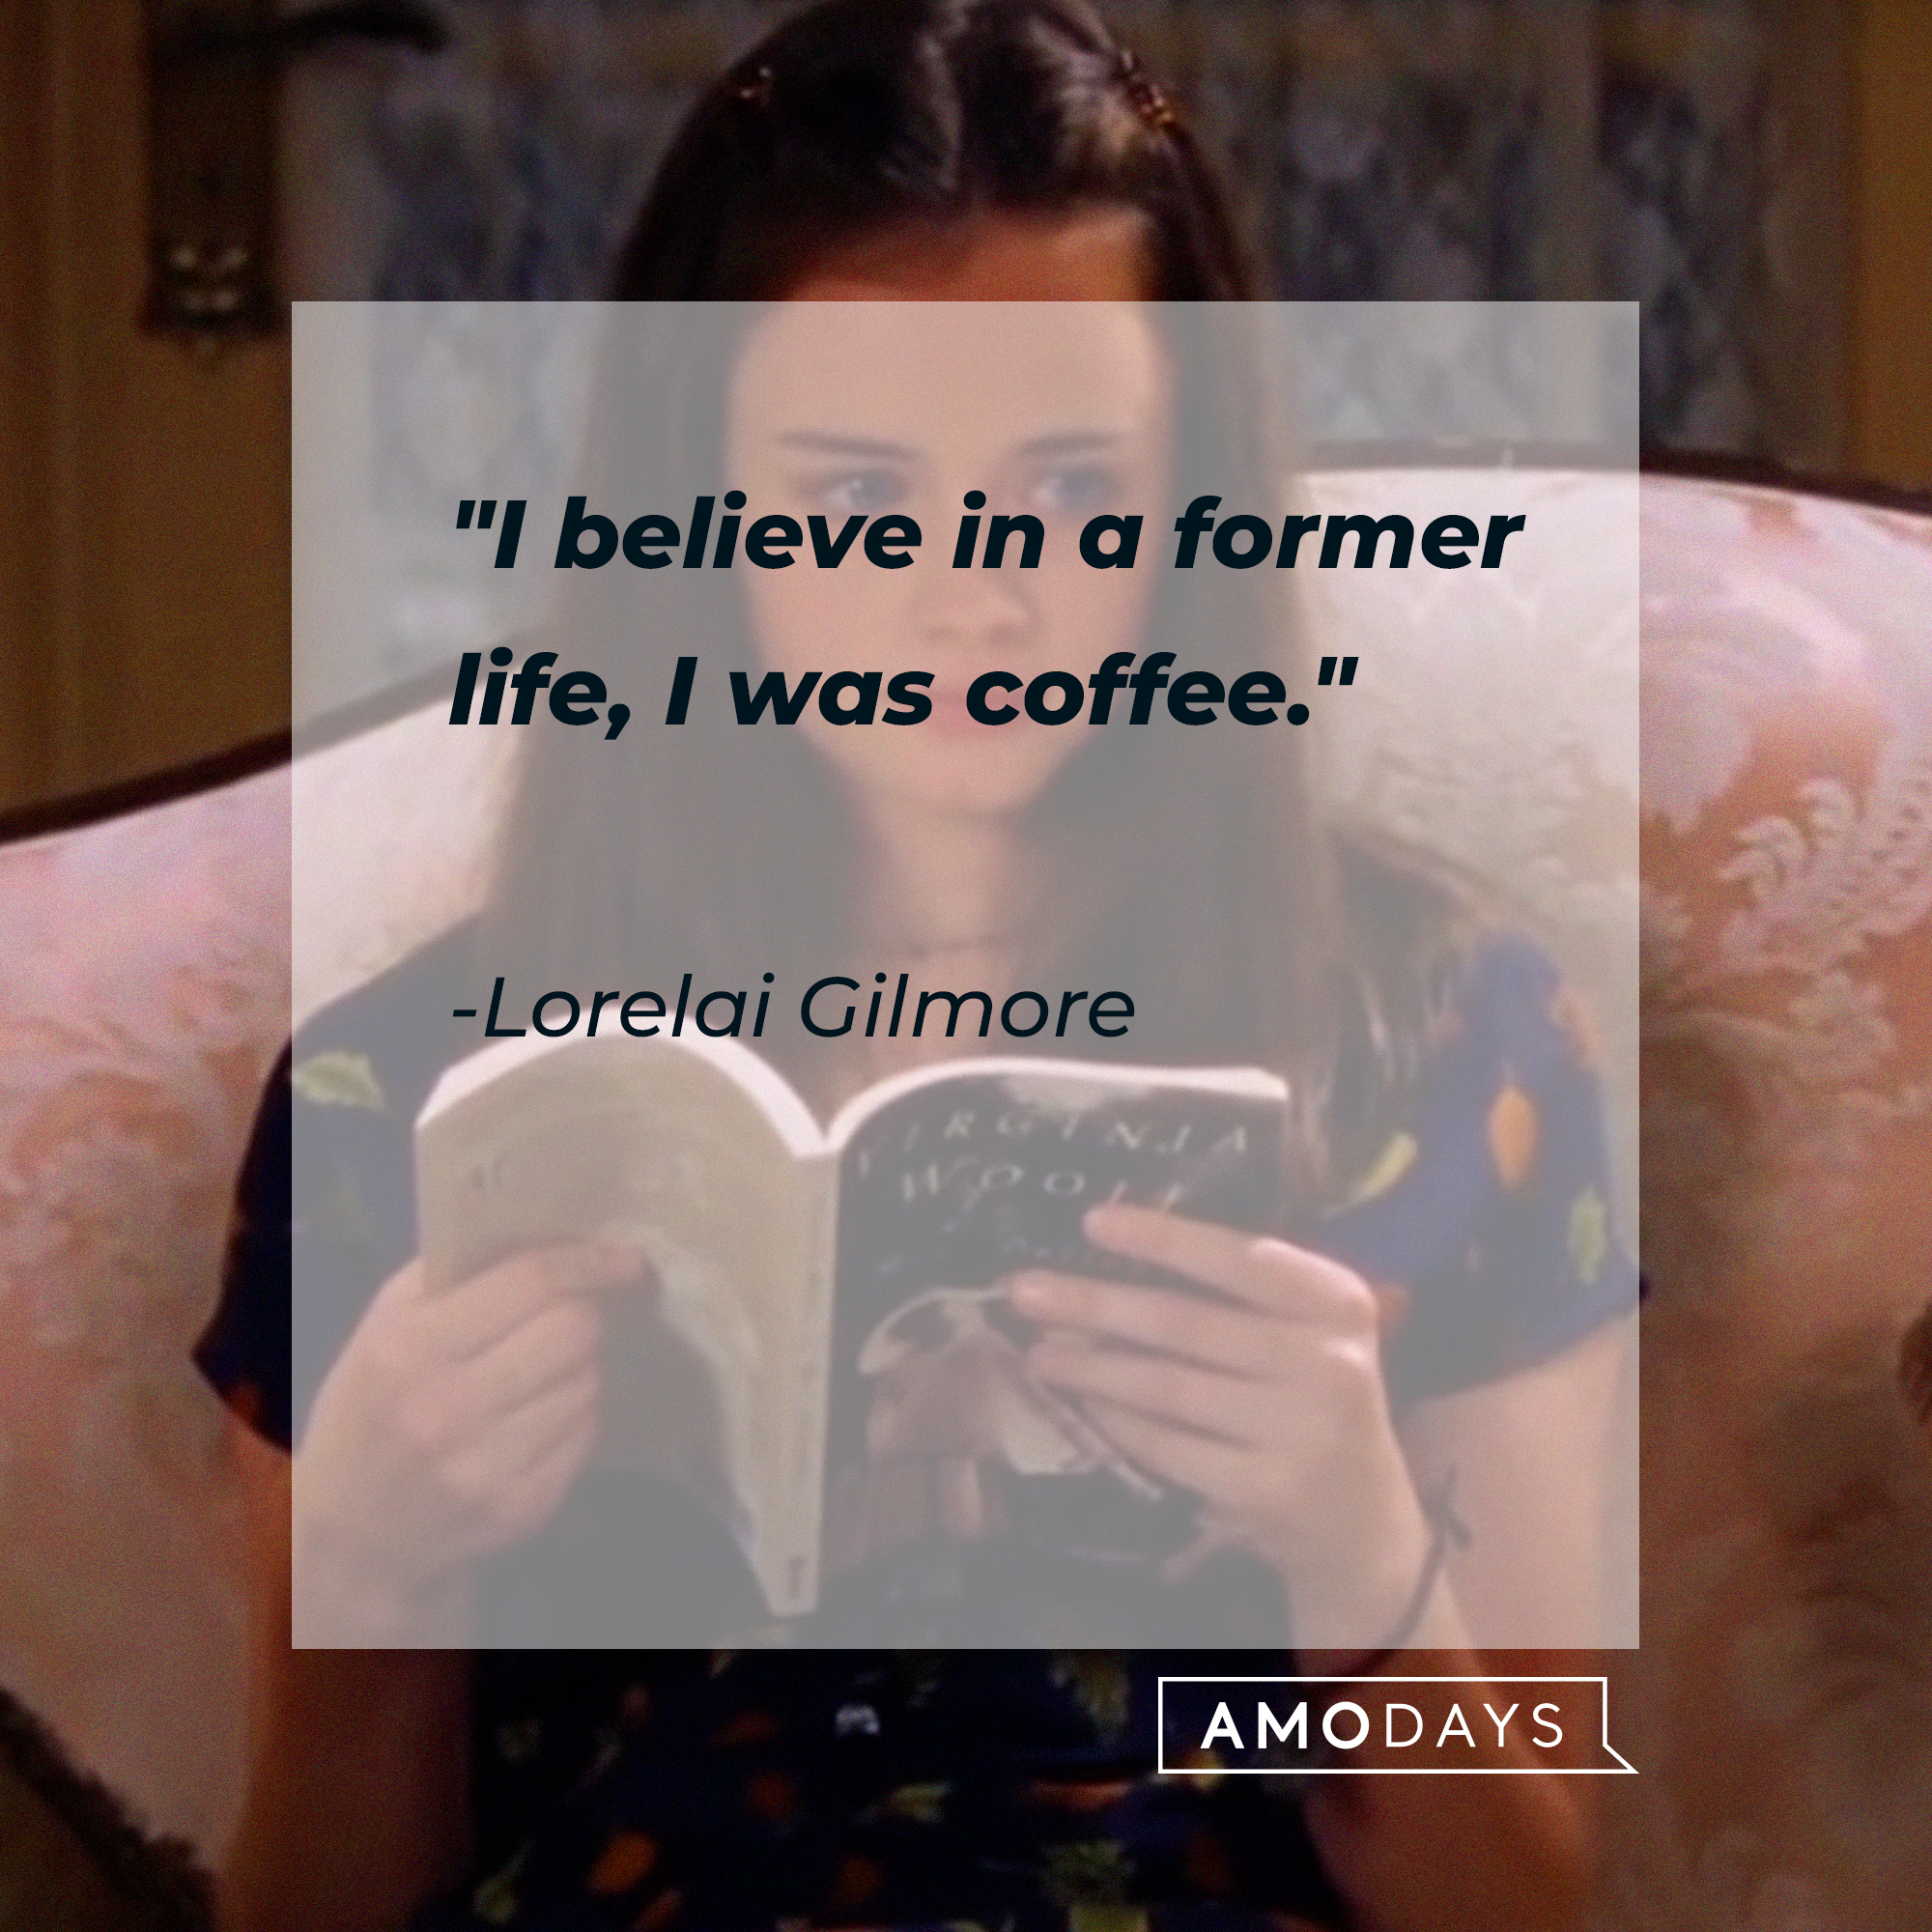 Lorelai Gilmore's quote: "I believe in a former life, I was coffee." | Source: facebook.com/GilmoreGirls